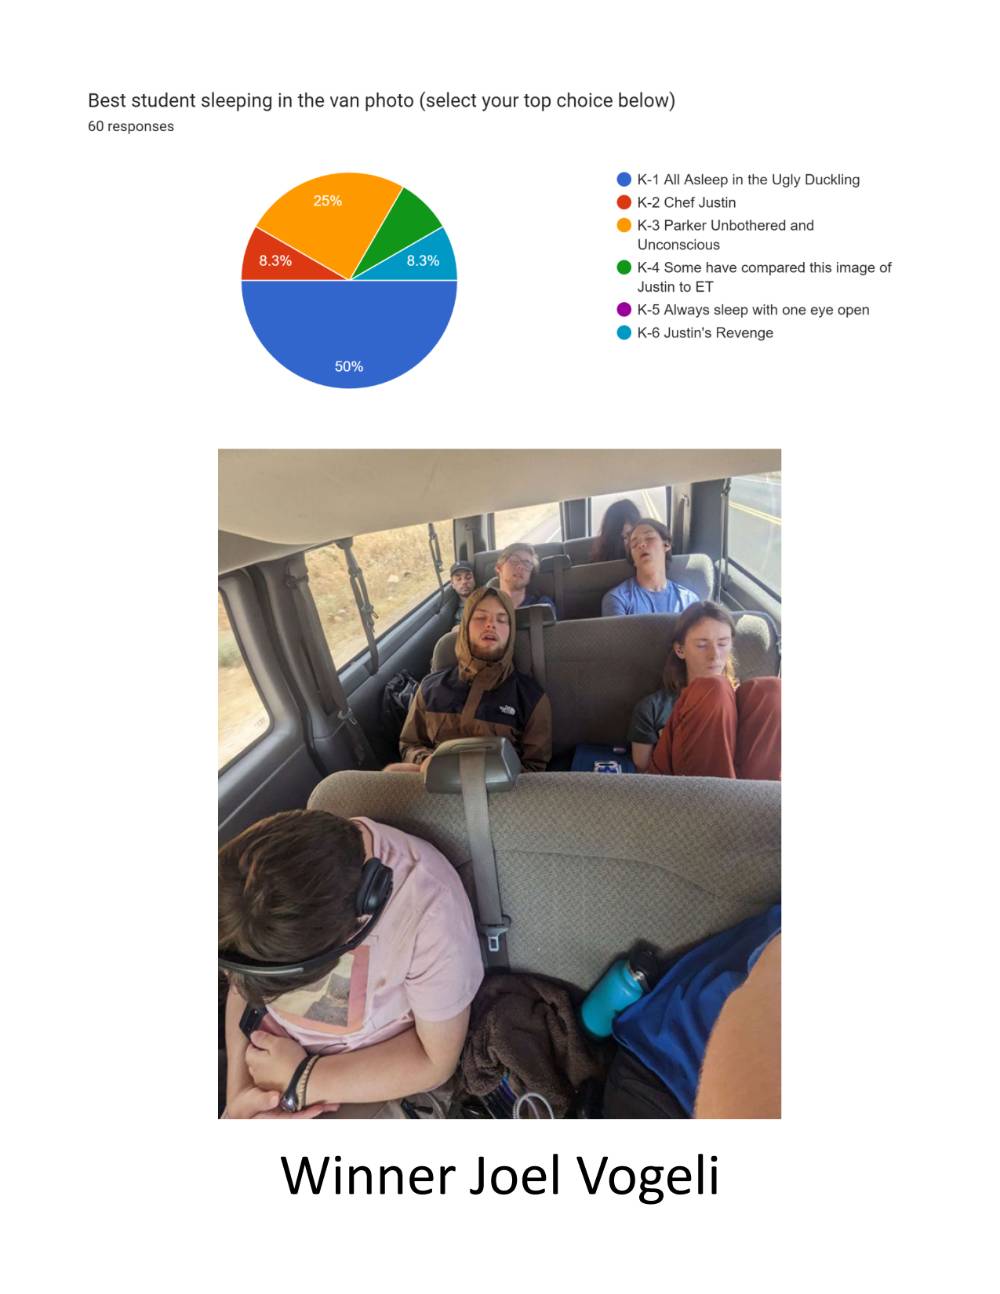 Best Sleeping in the Van Photo